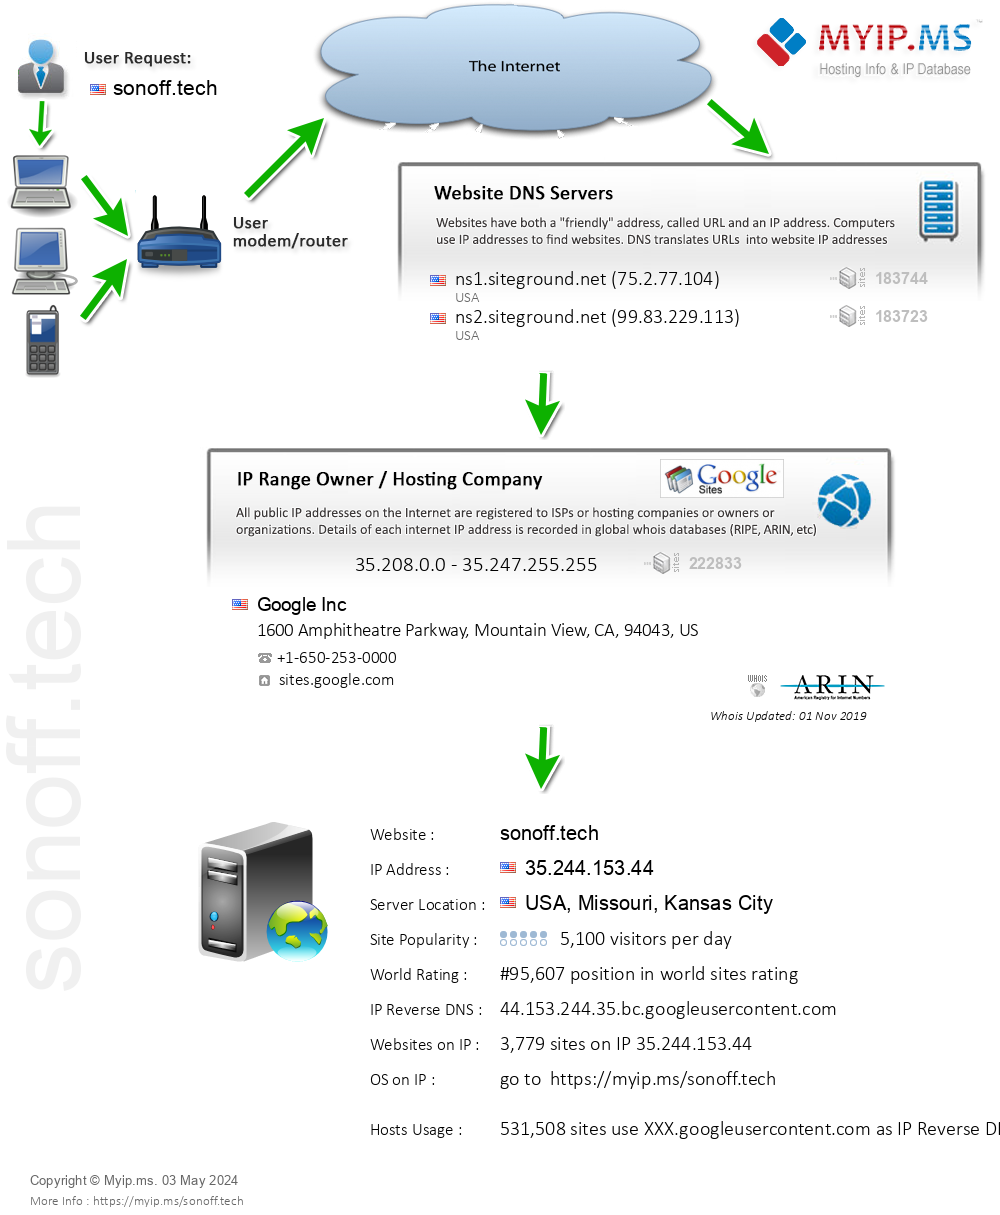 Sonoff.tech - Website Hosting Visual IP Diagram